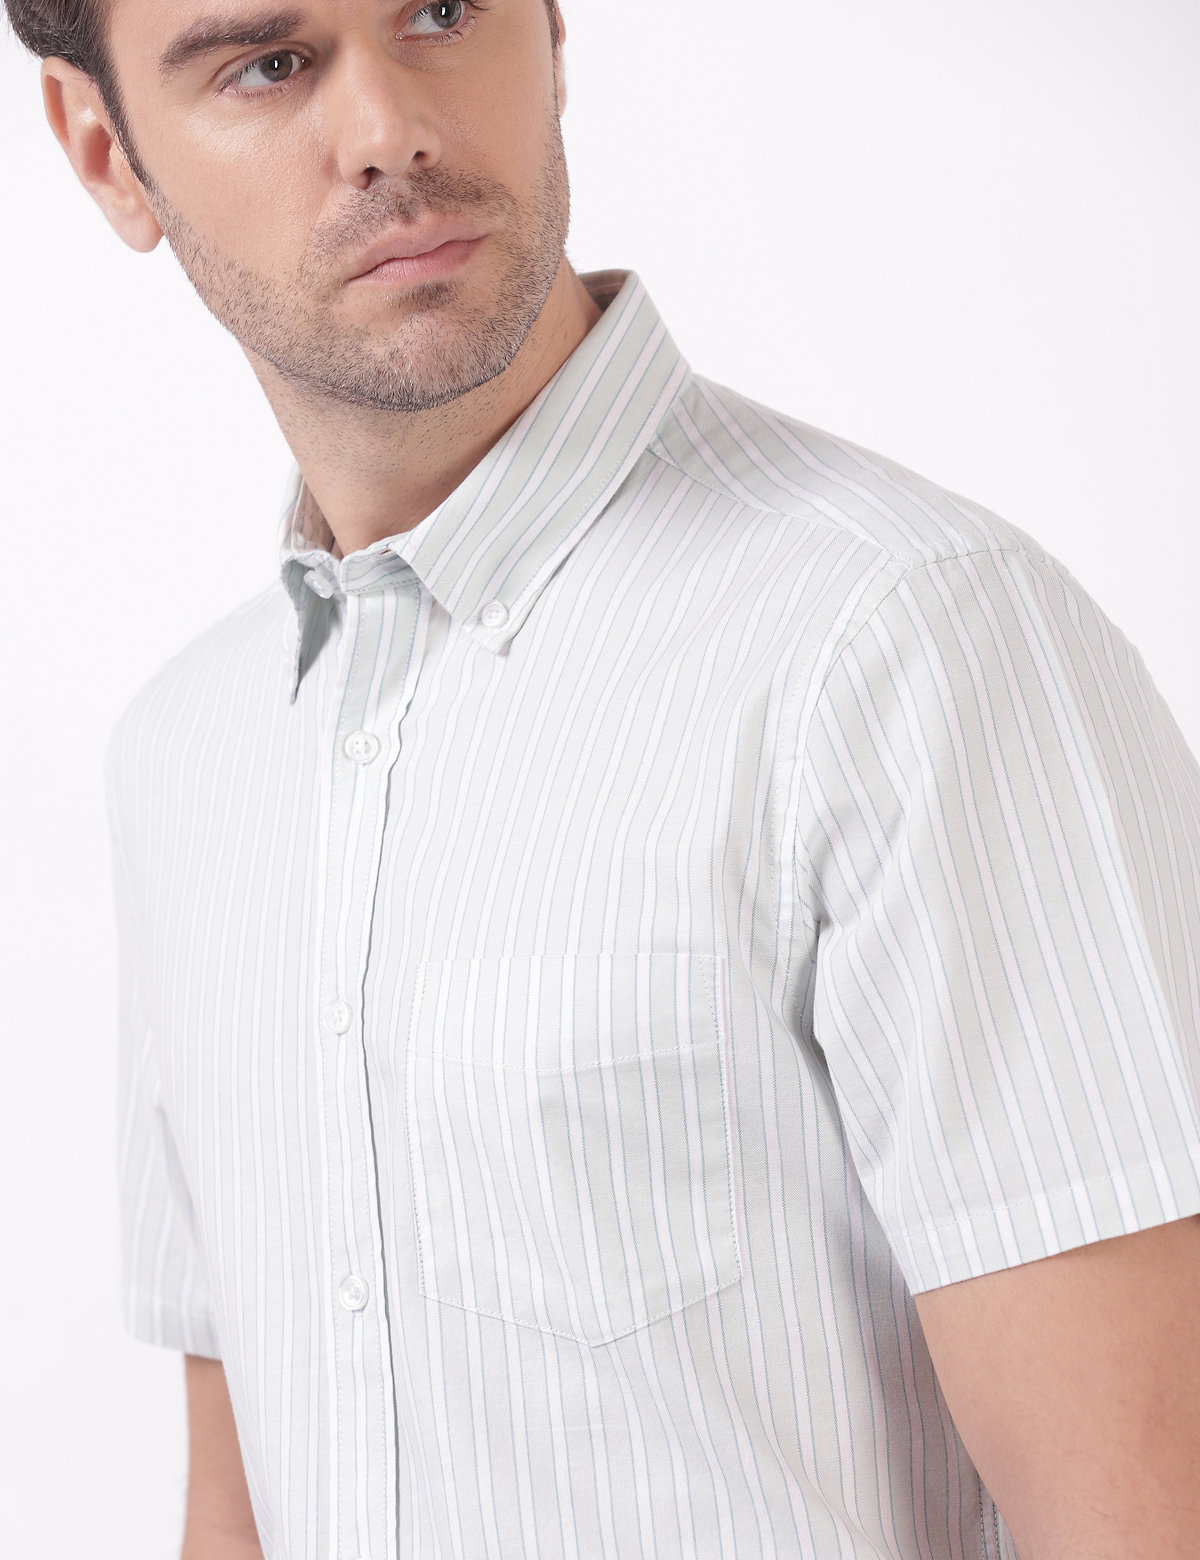 Cotton Stripes Button Down Collar Shirts